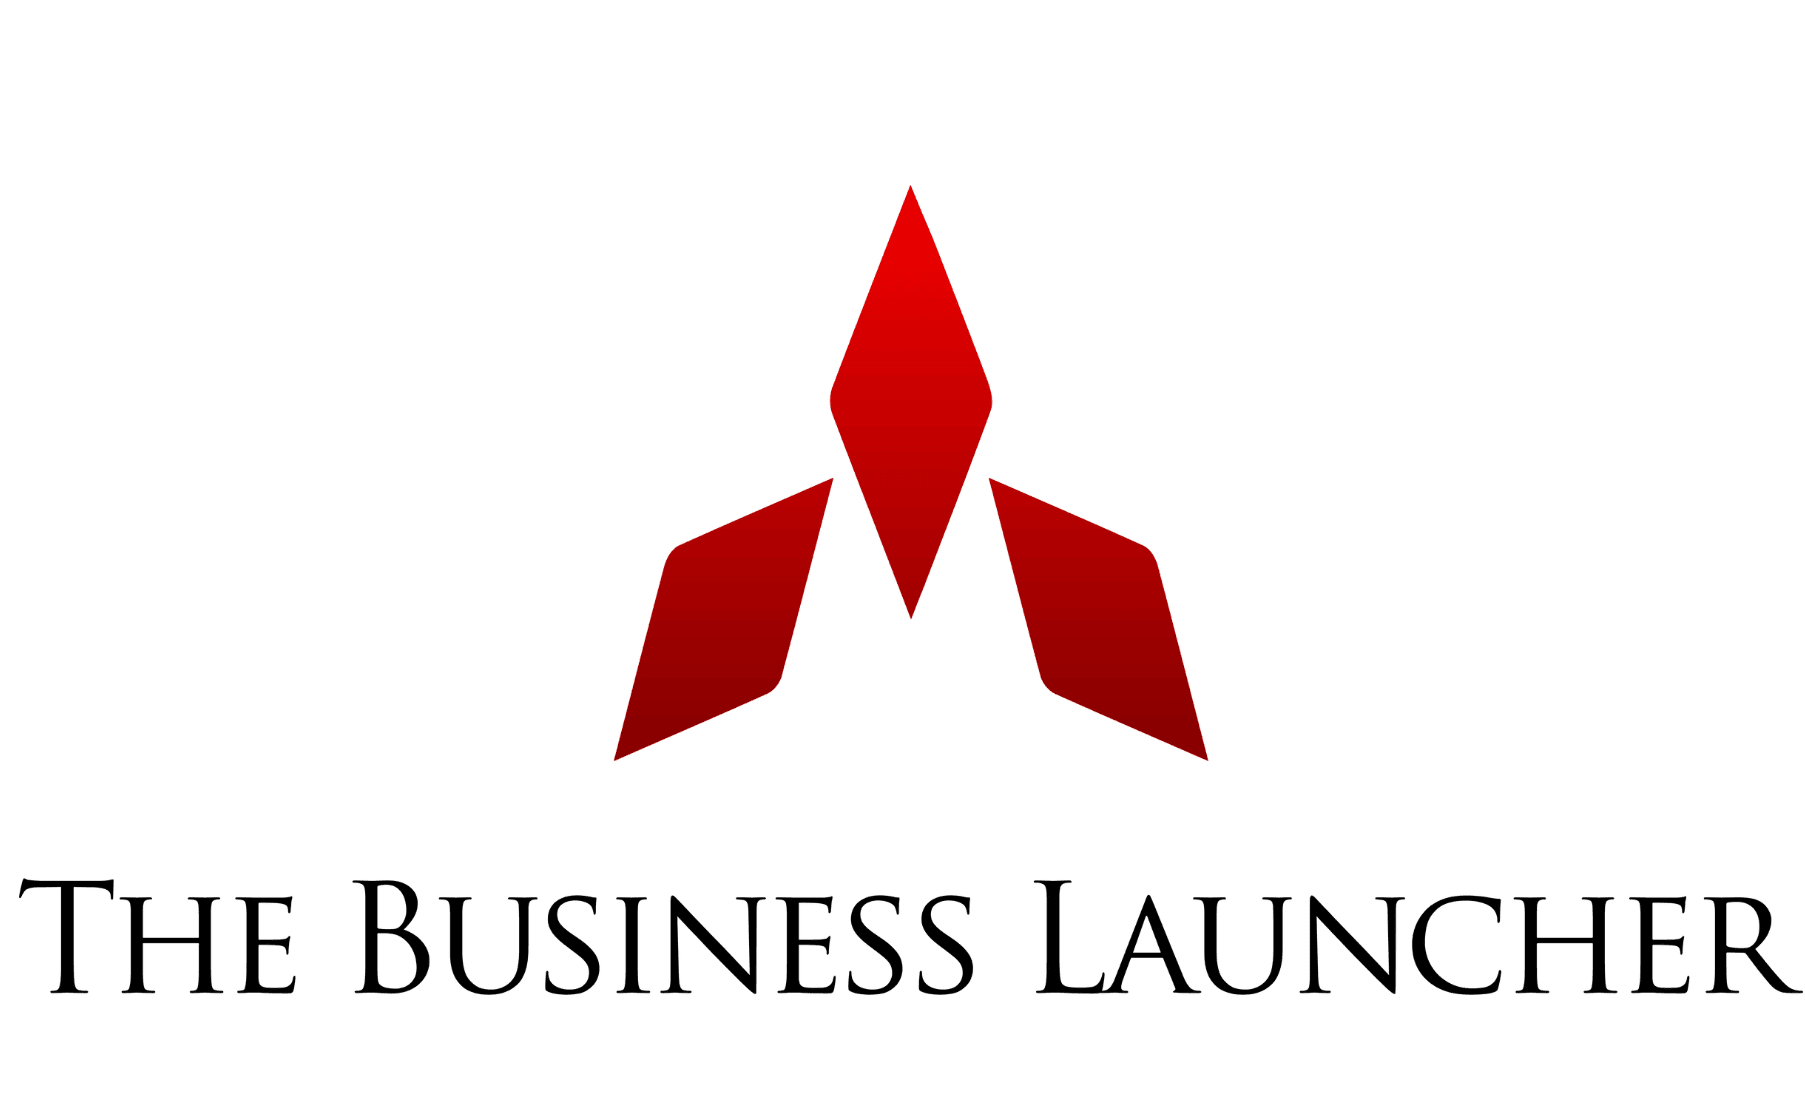 The Business Launcher LLC